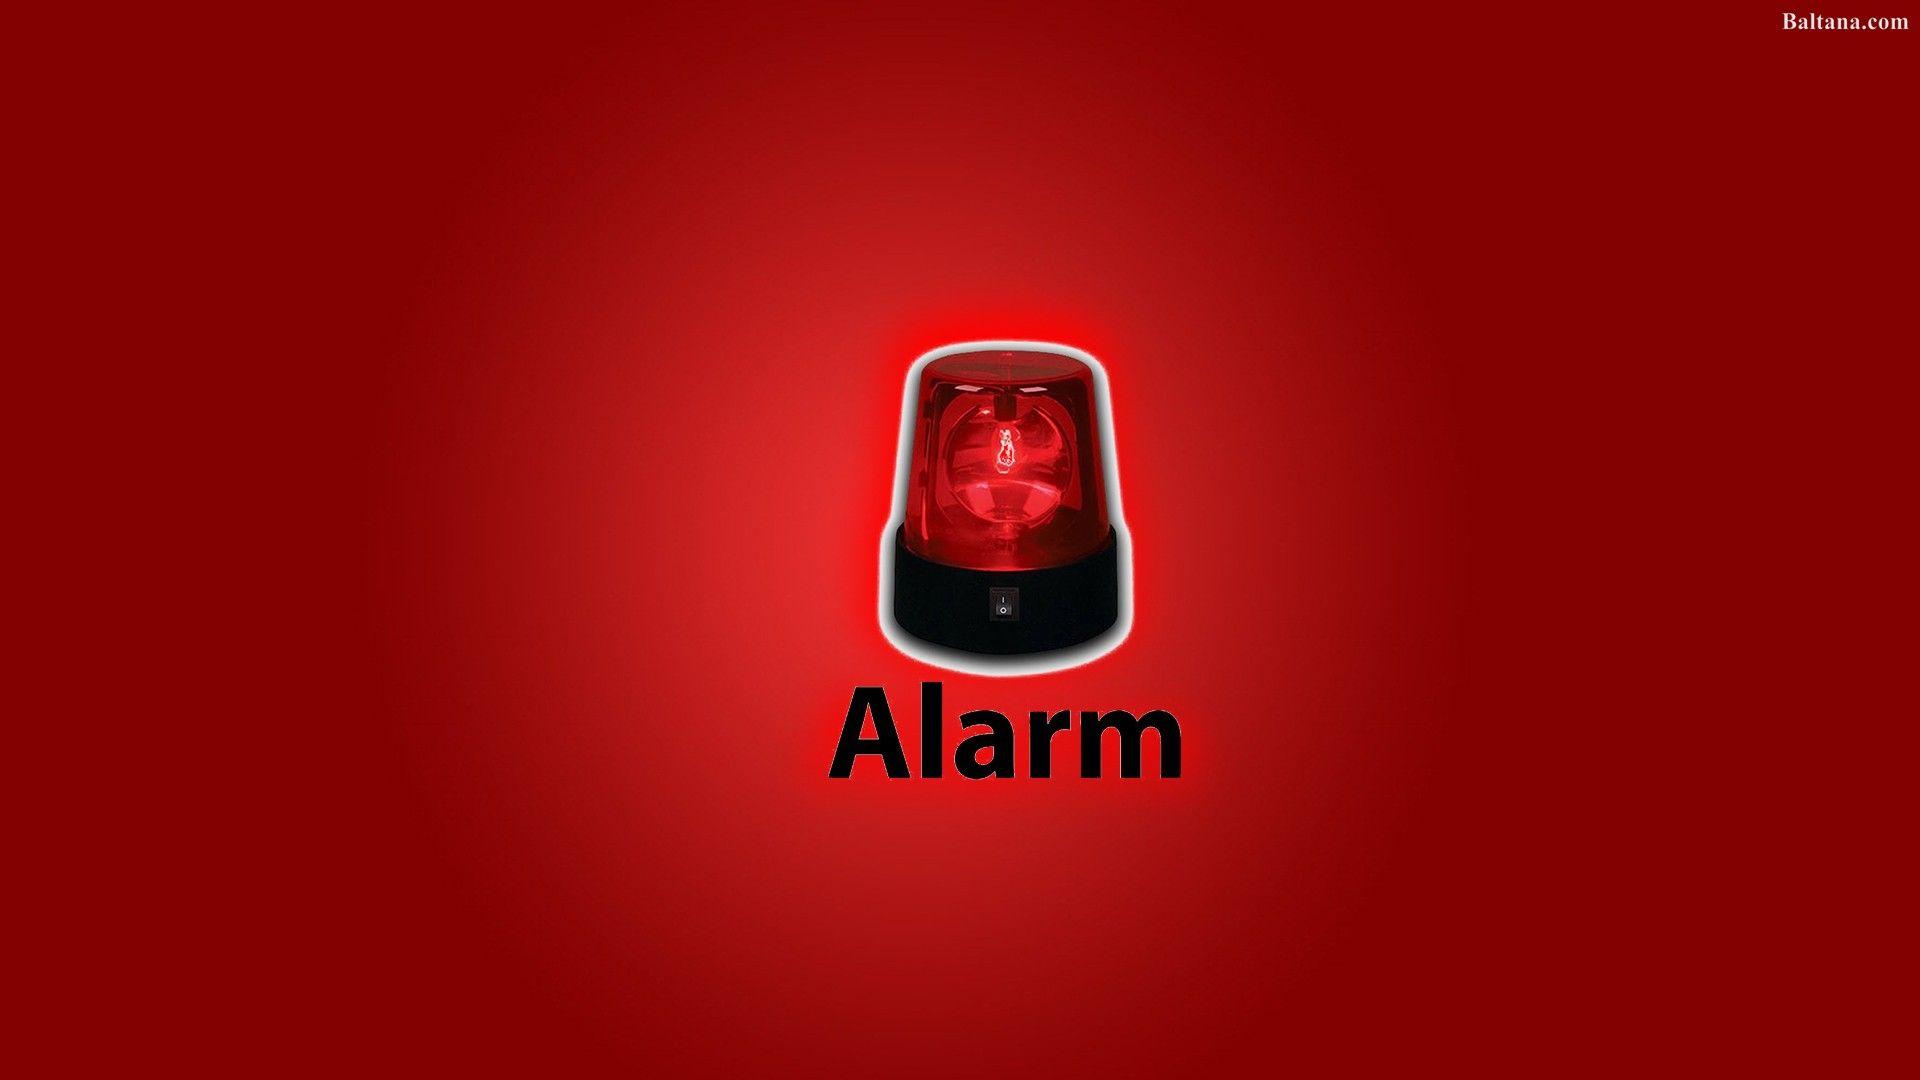 Alarm HD Desktop Wallpaper 29559